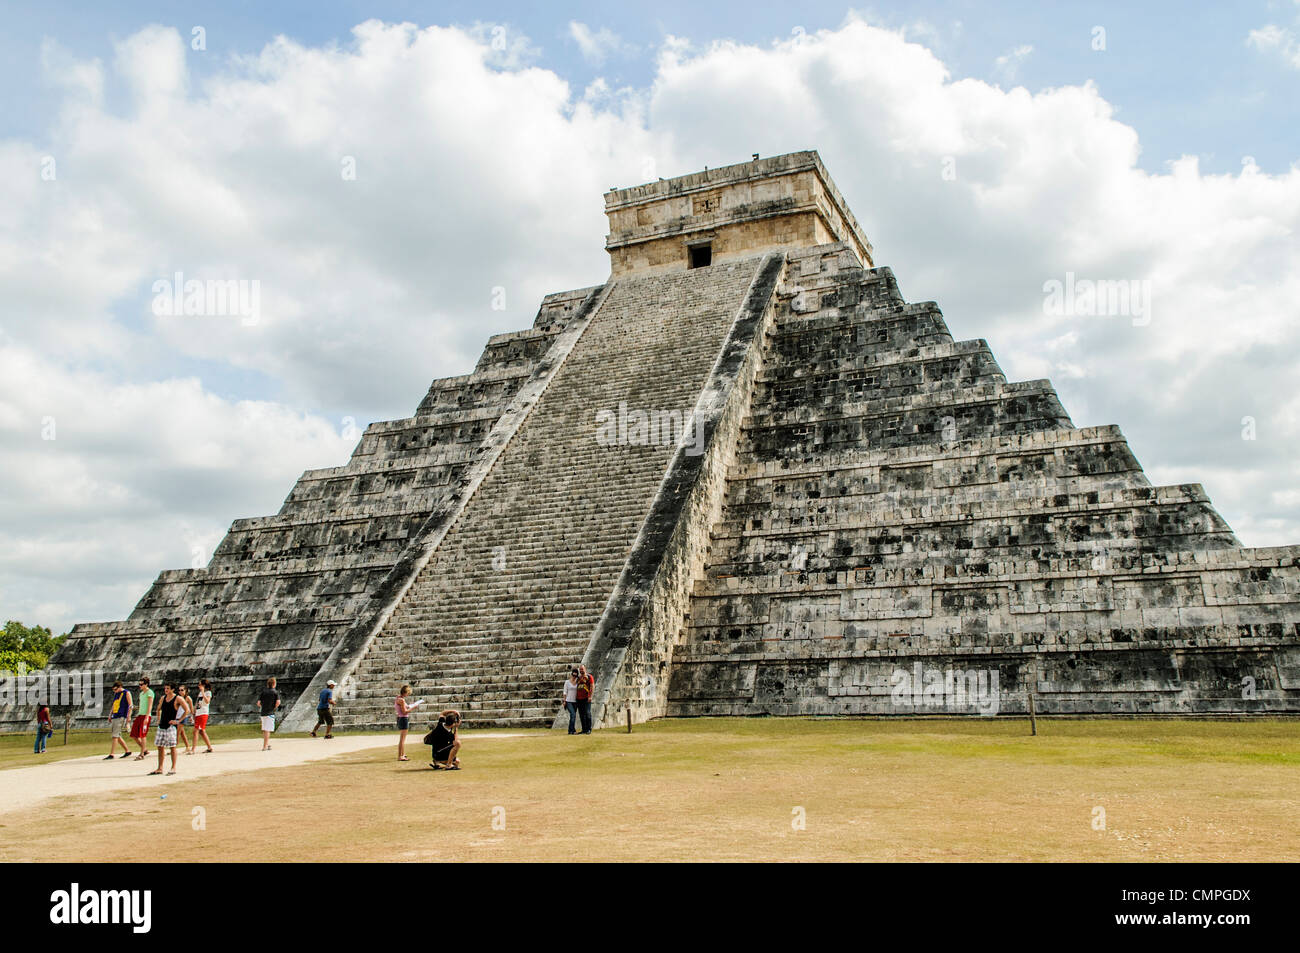 CHICHEN ITZA, Mexico - Wide shot of the steps of Temple of Kukulkan (El Castillo) at Chichen Itza Archeological Zone, ruins of a major Maya civilization city in the heart of Mexico's Yucatan Peninsula. Stock Photo